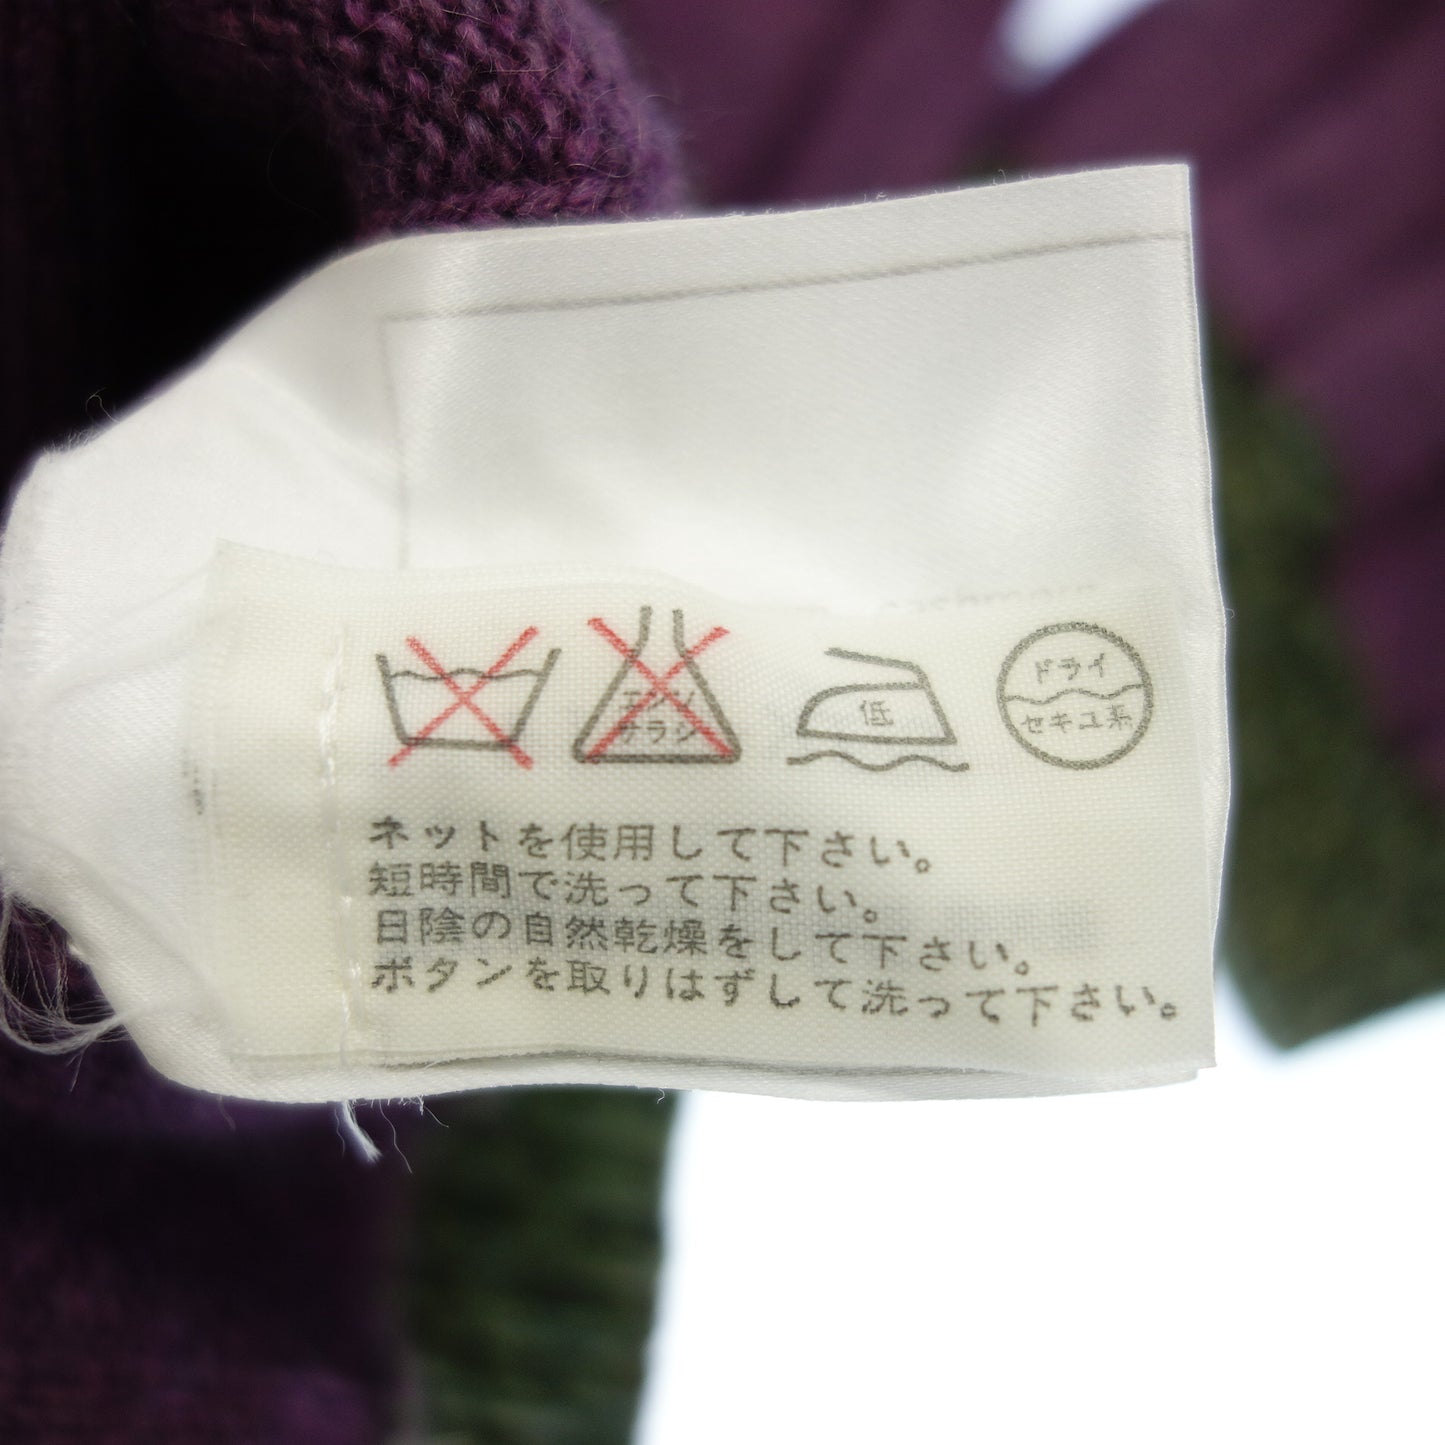 CHANEL 针织毛衣 双色可可纽扣 97A 女式 紫色 38 CHANEL [AFB21] [二手] 